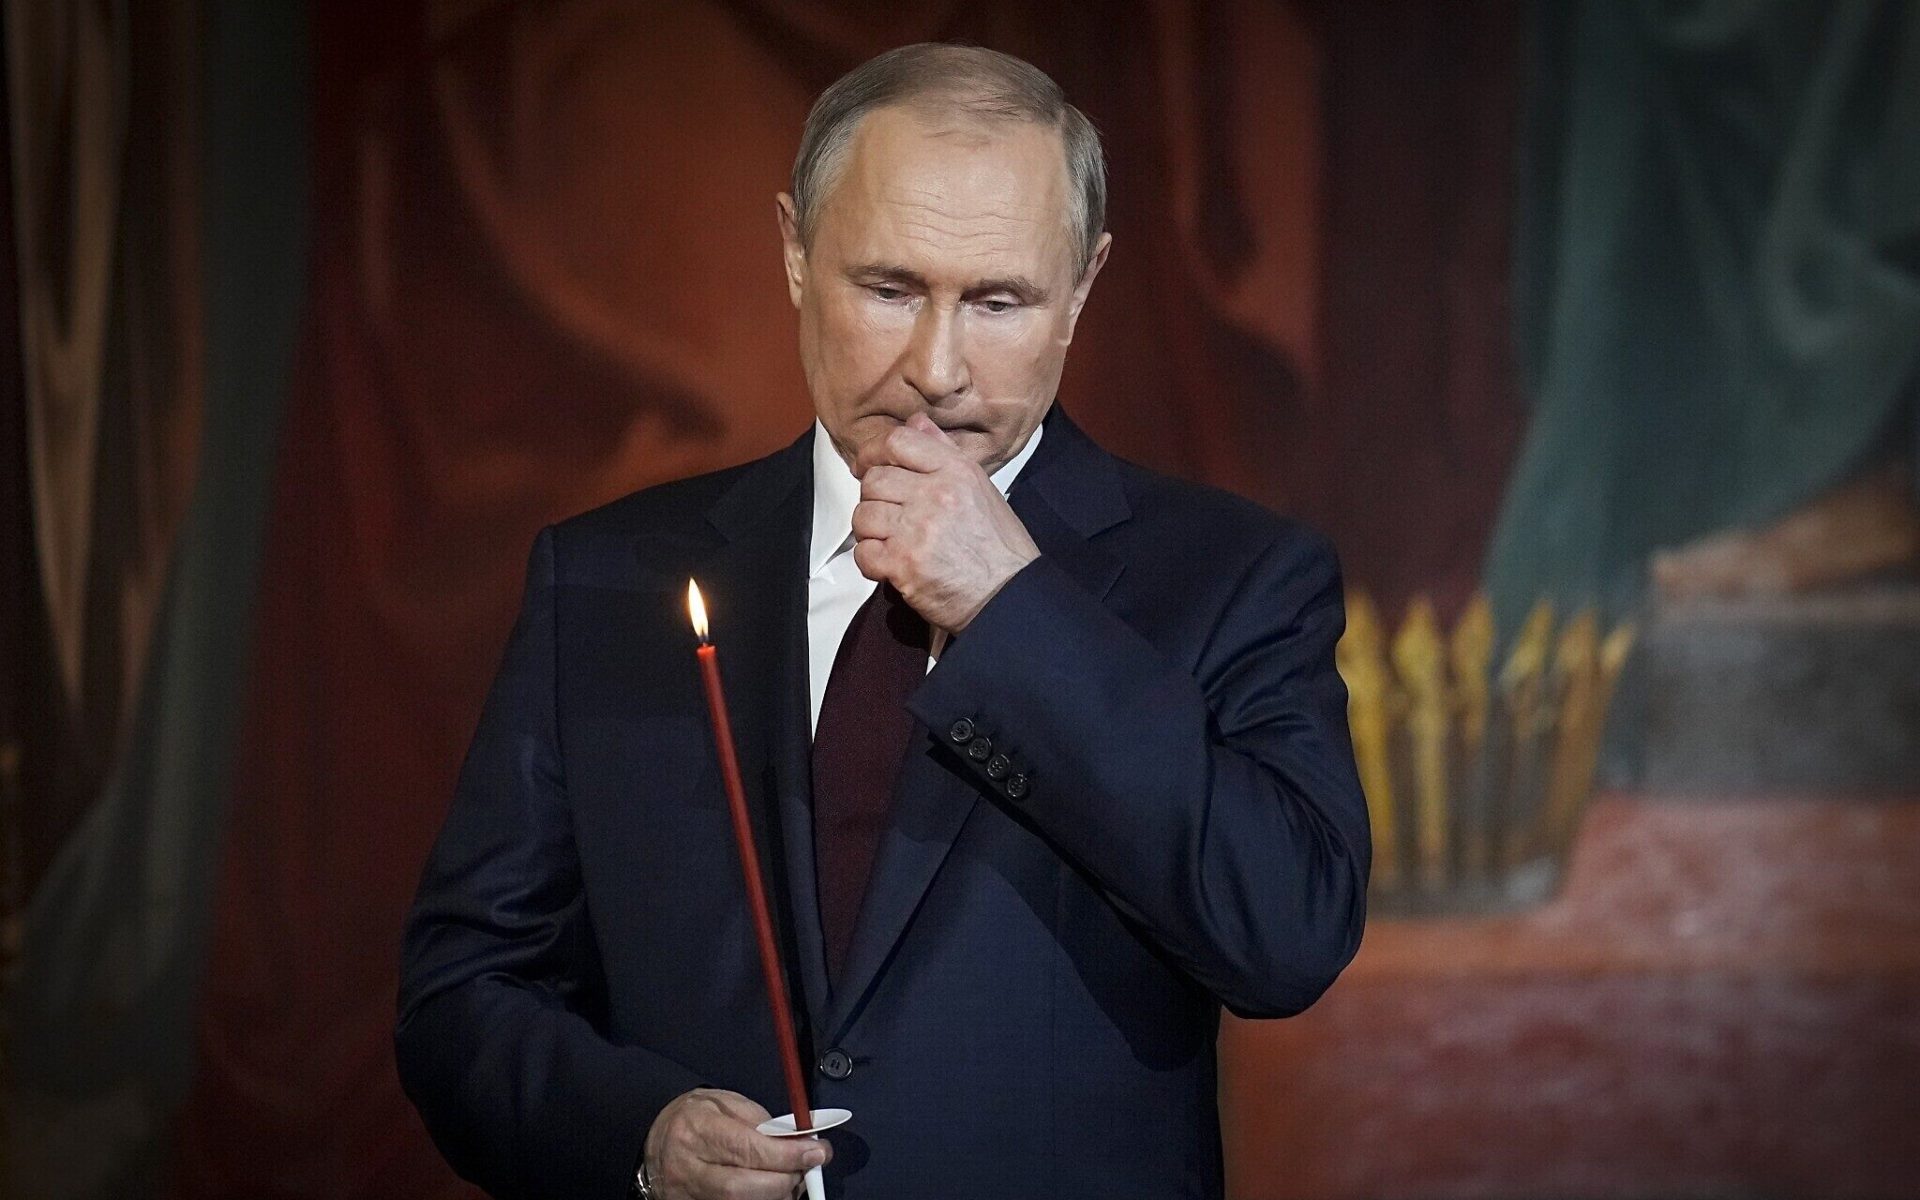 Russian President Vladimir Putin has cancer